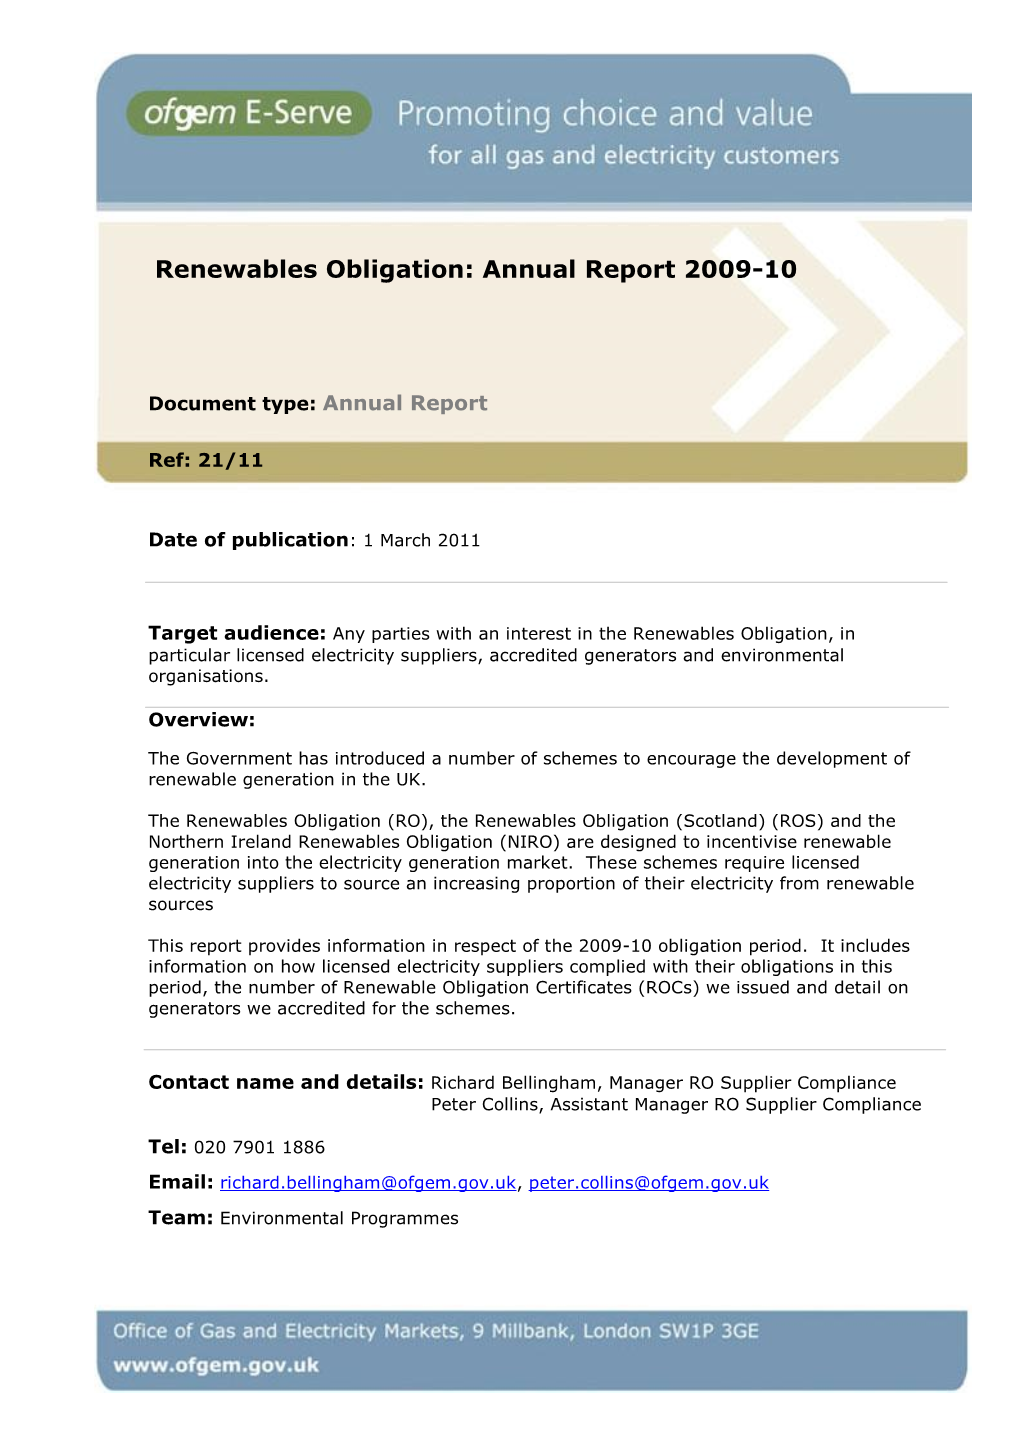 Renewables Obligation Annual Report 2009-2010